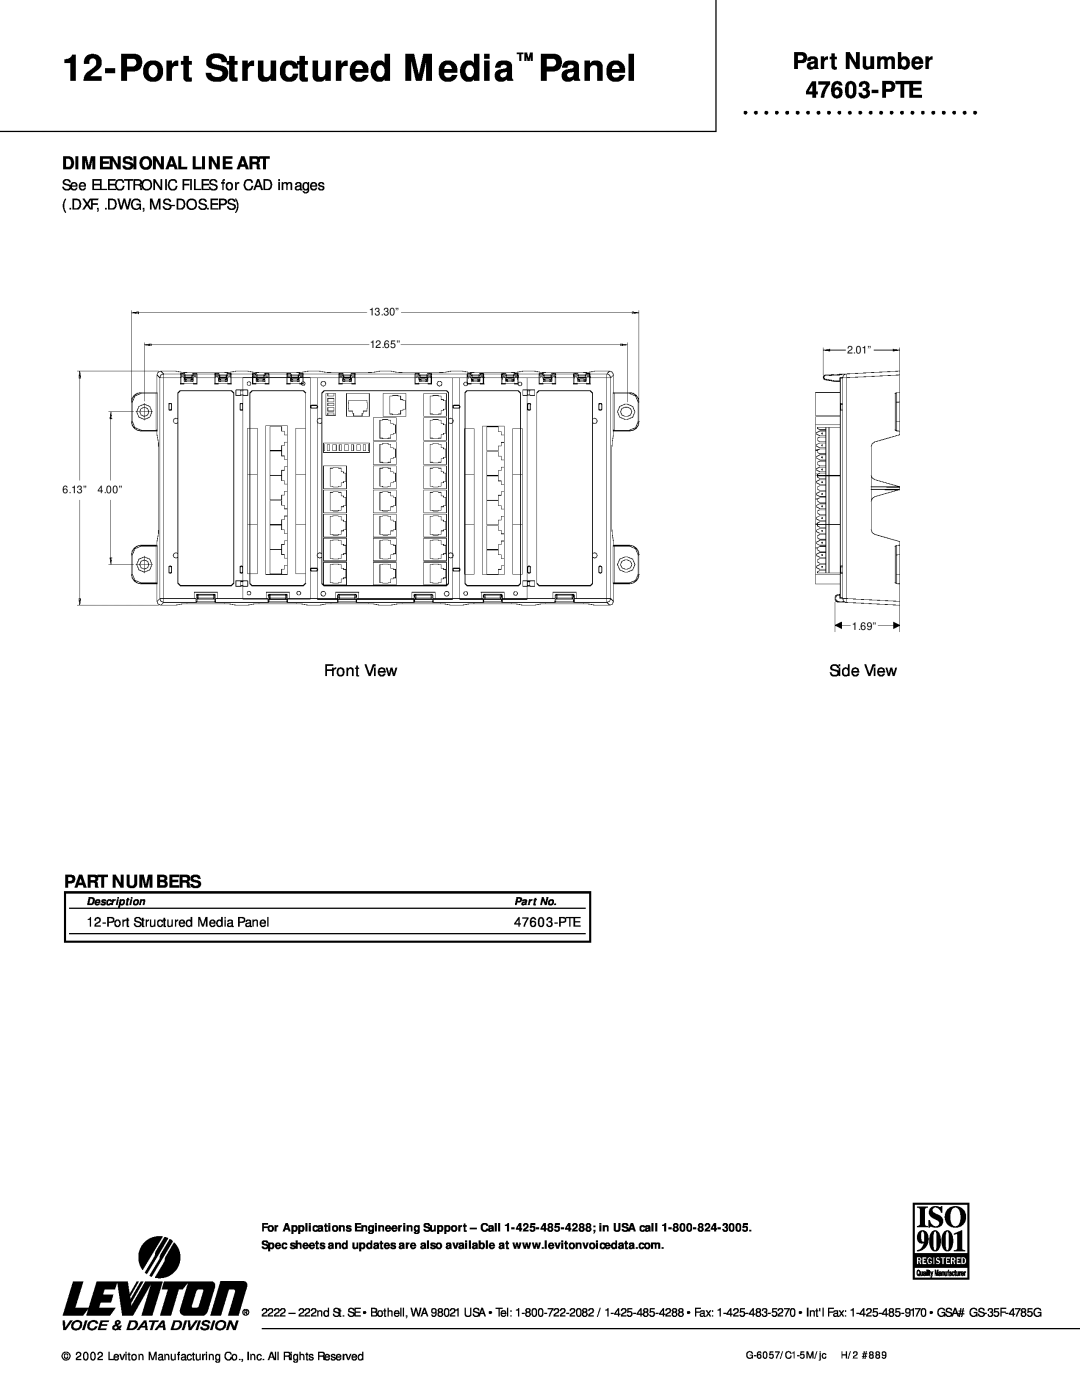 Leviton warranty Part Number 47603-PTE, Dimensional Line Art, Part Numbers, Port Structured Media Panel, Description 